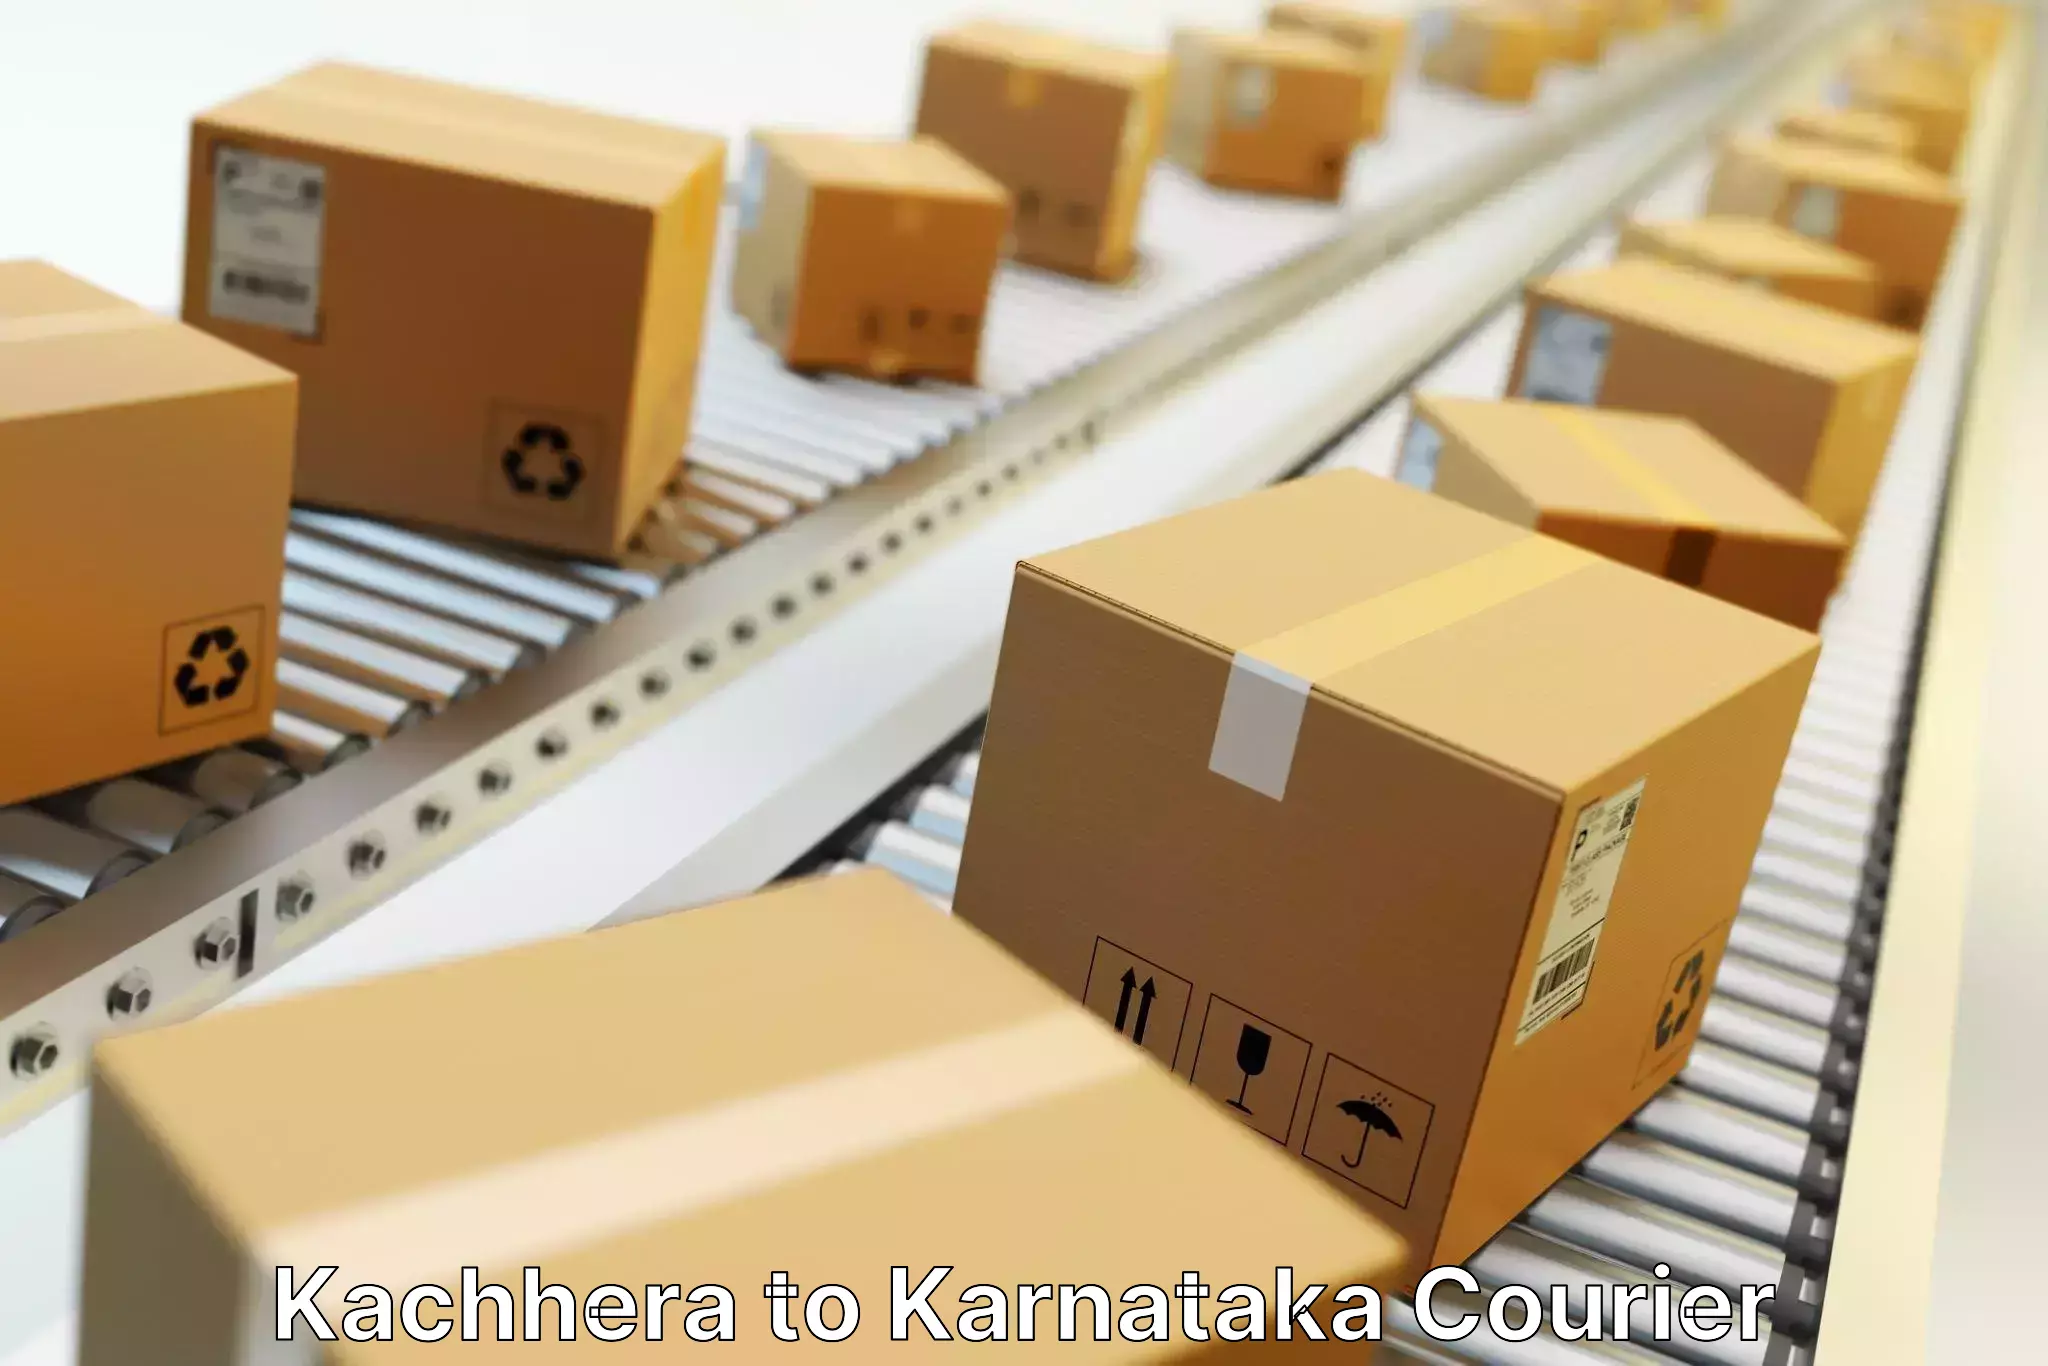 Courier service booking Kachhera to Bengaluru